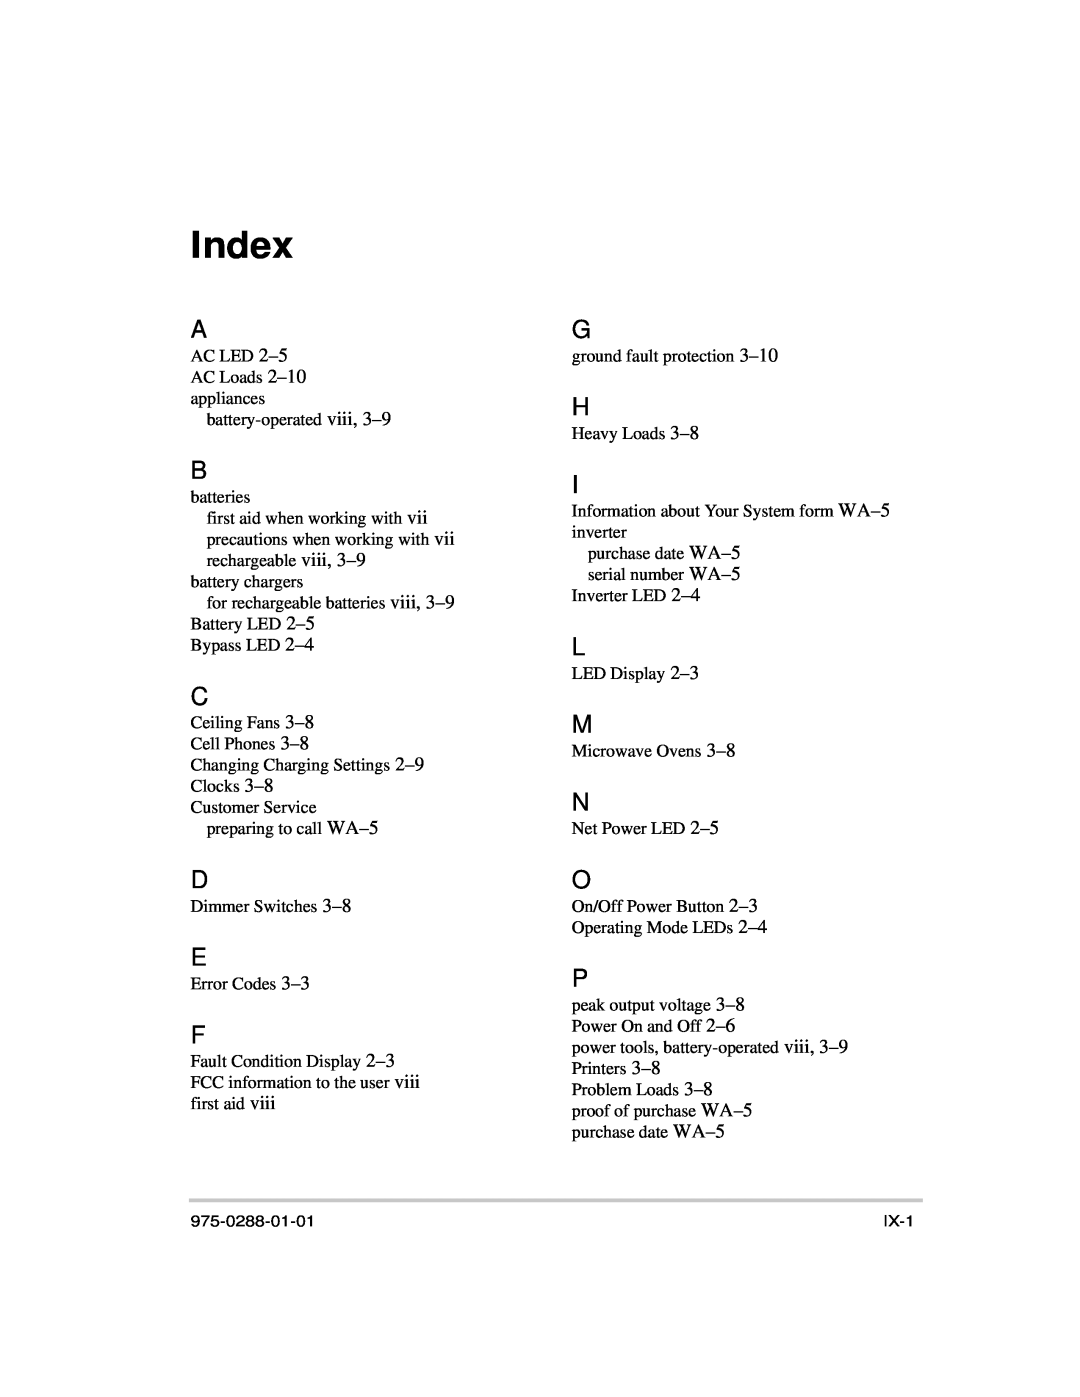 Xantrex Technology PH1800 manual Index 